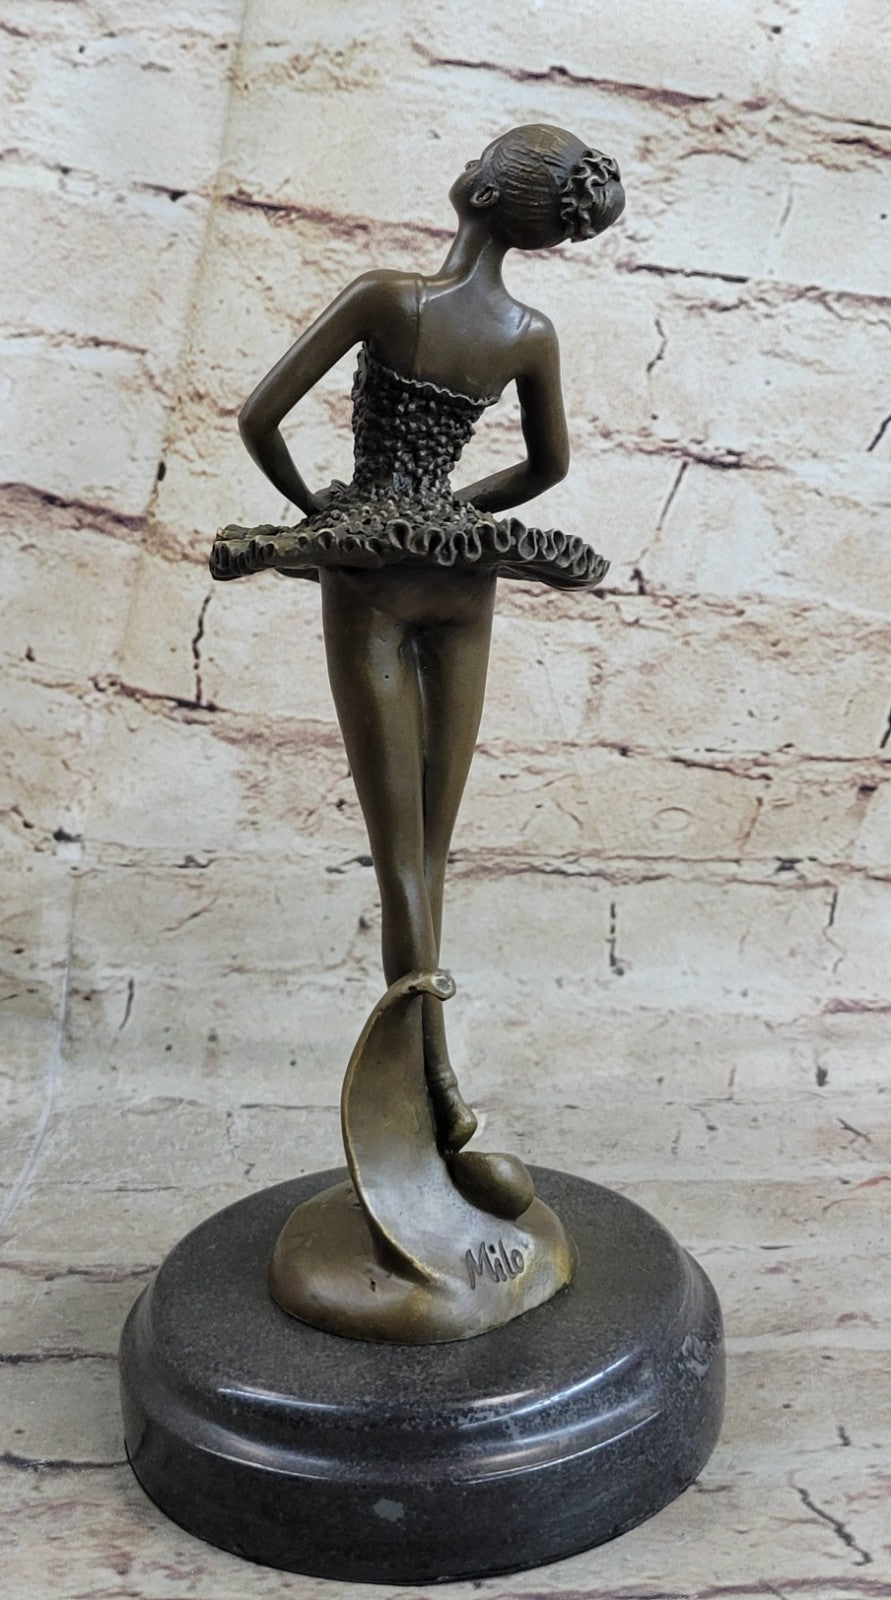 Cast Bronze Sculpture Ballerina Ballet Dancer Figurine Statue Hand Made Statue